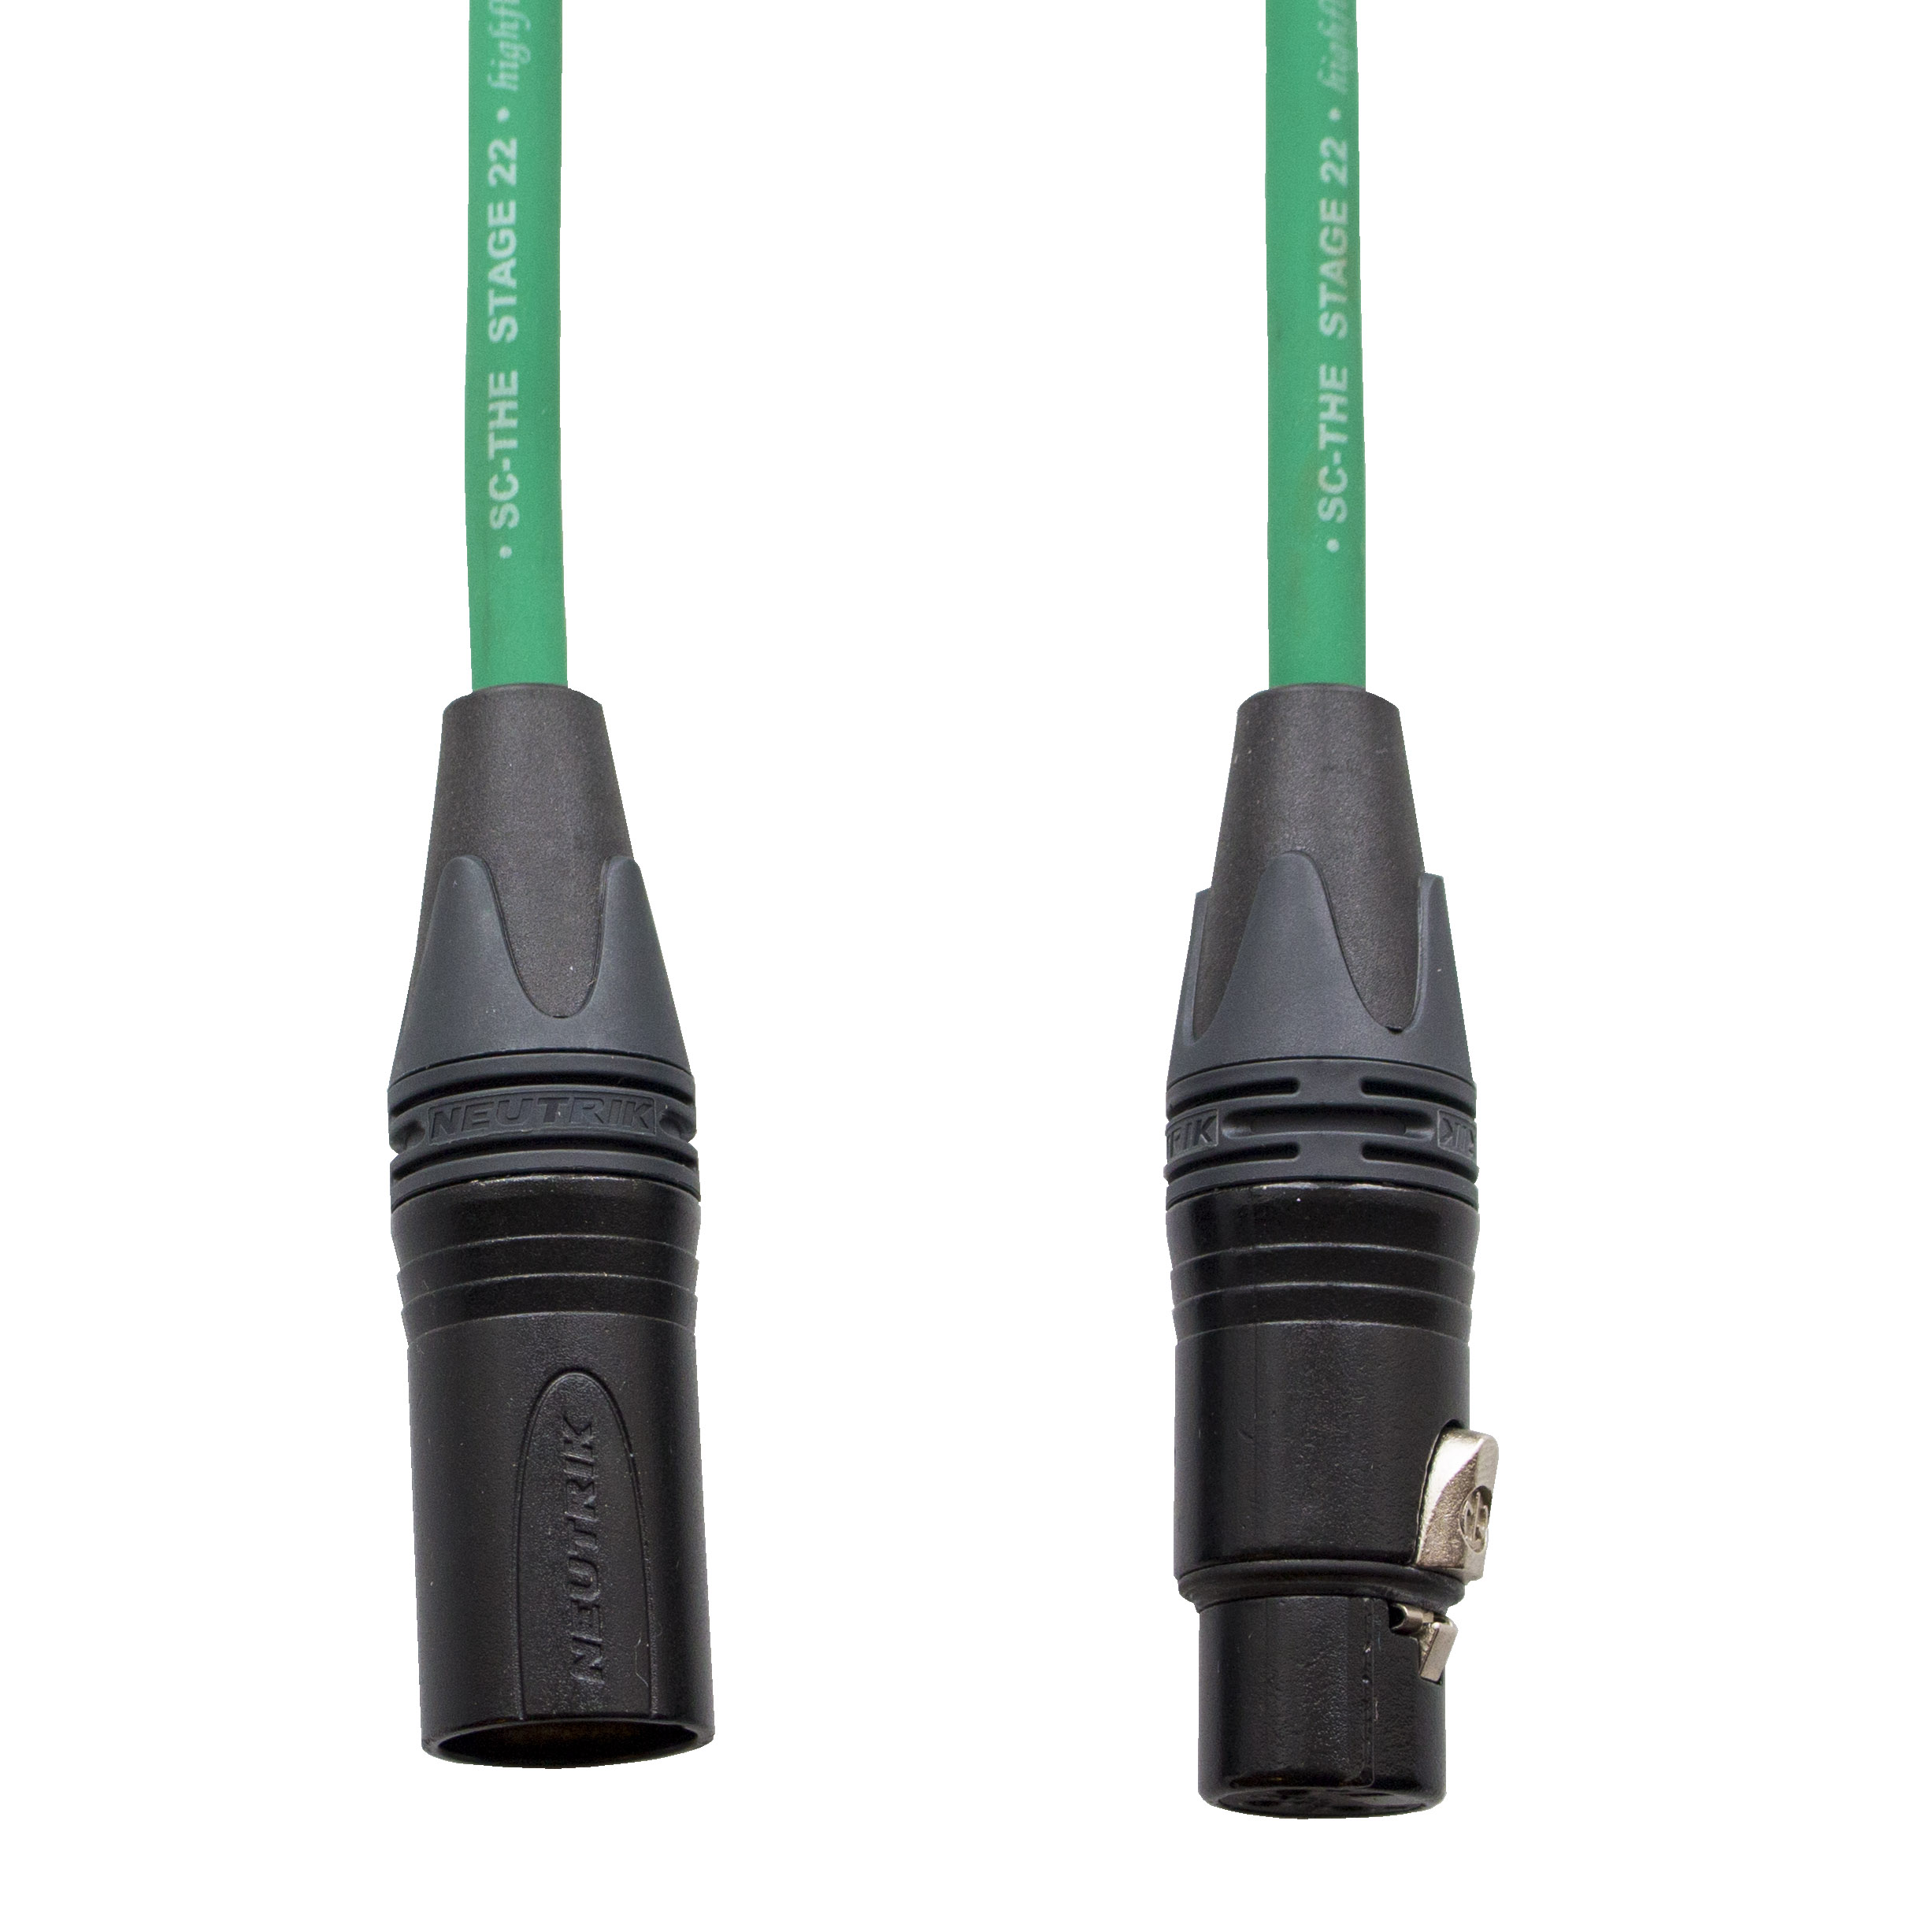 Audiokabel XLR konektor Neutrik poz. male/female  6 m, Sommer, zelený